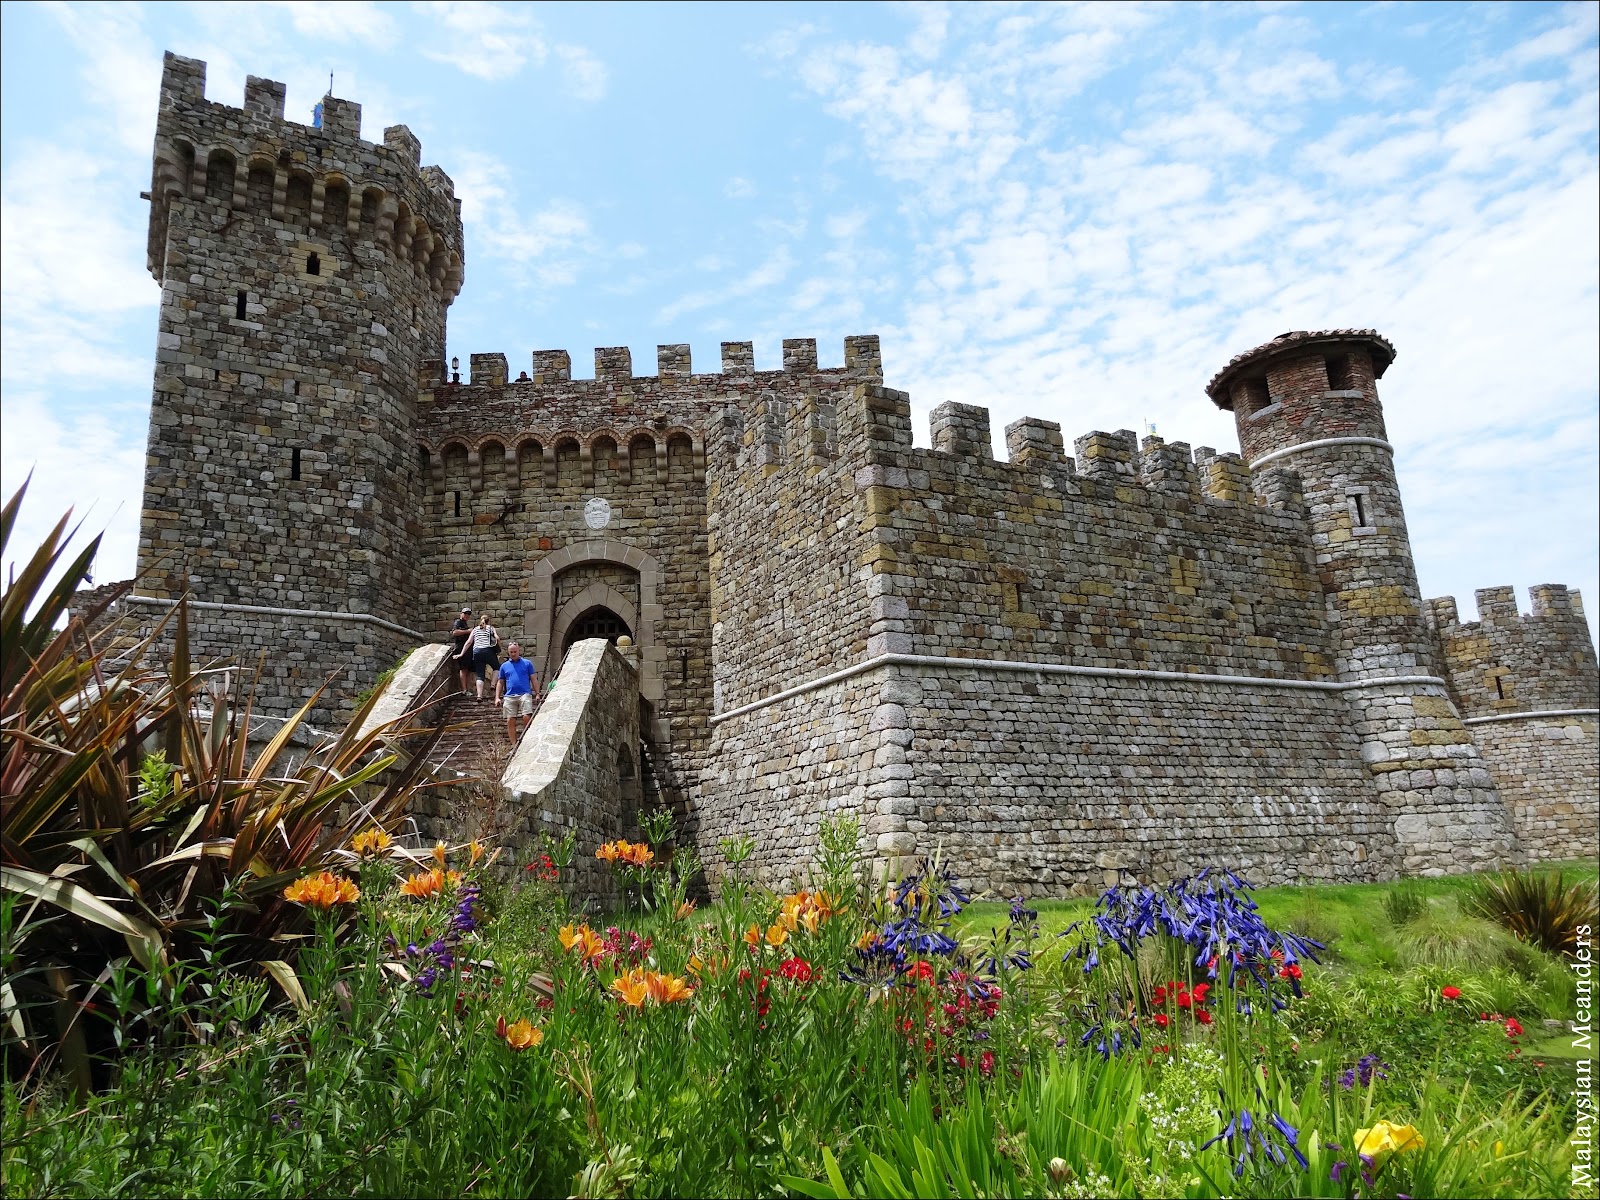 Malaysian Meanders: Castello di Amorosa: Medieval Castle in Napa Valley